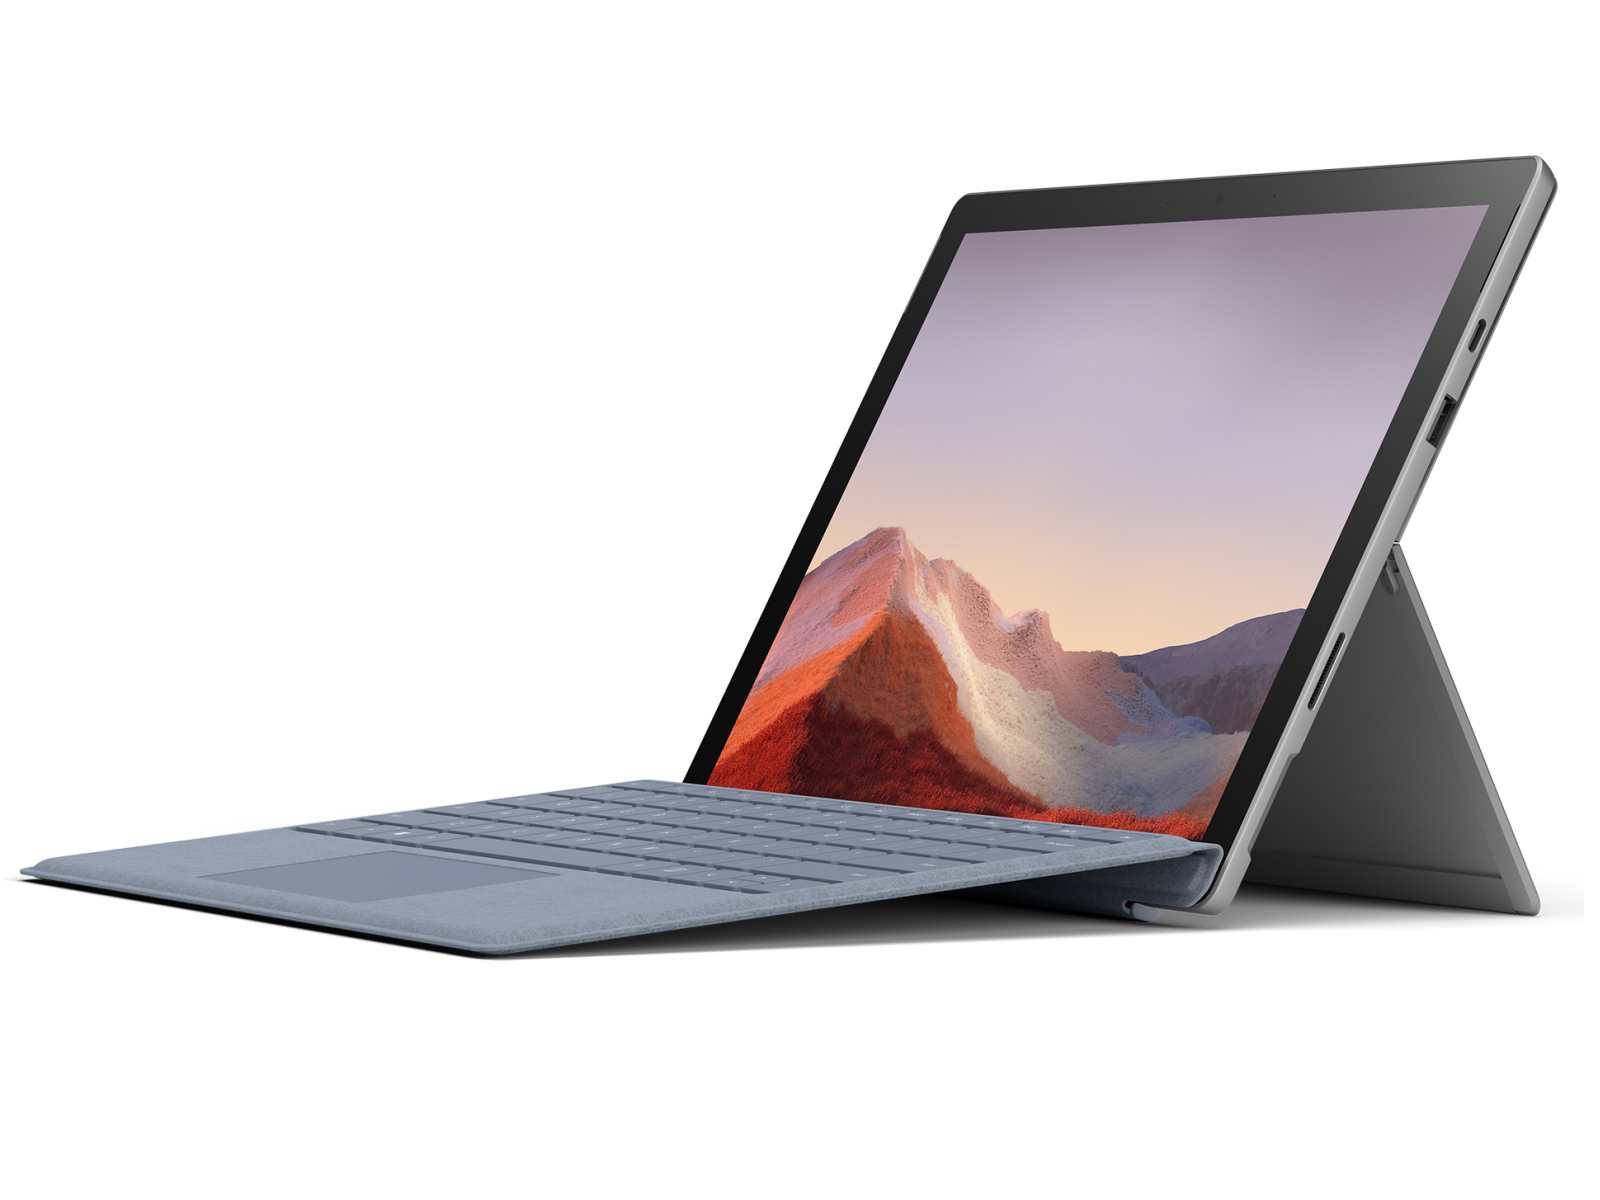 Microsoft Surface Pro 7 Plus - Notebookcheck.net External Reviews